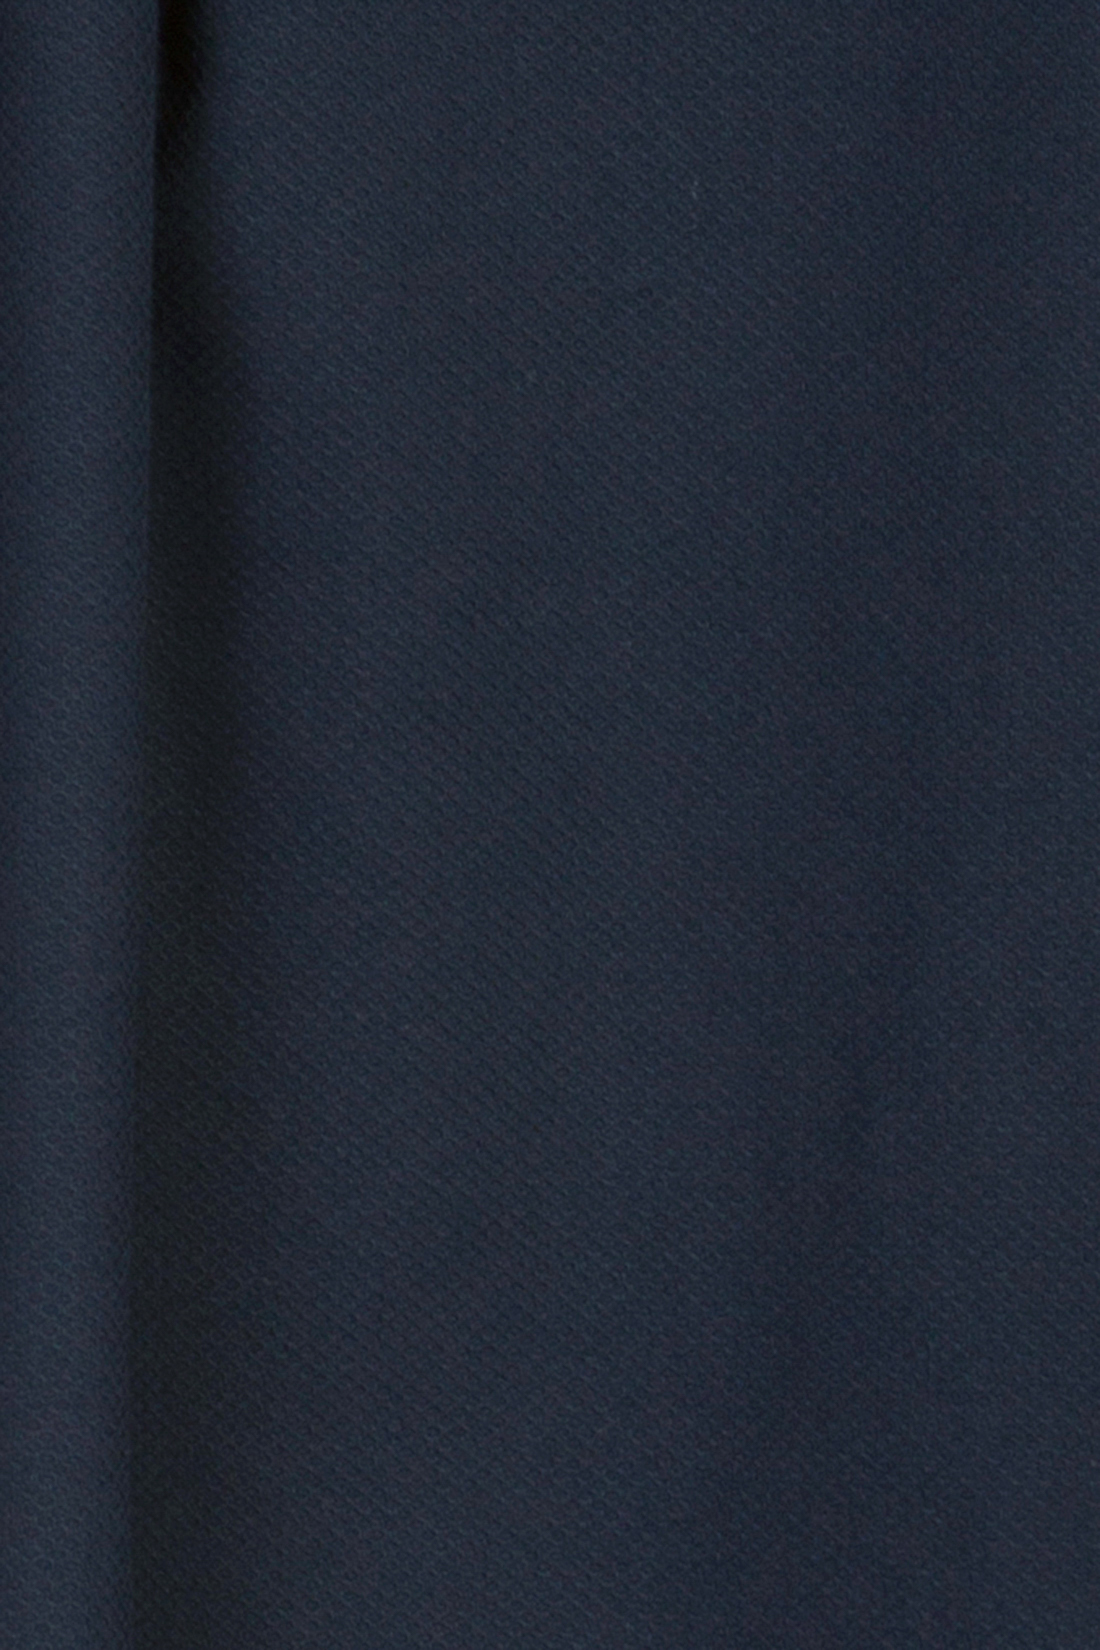 Юбка из рельефного хлопка (арт. baon B477021), размер L, цвет синий Юбка из рельефного хлопка (арт. baon B477021) - фото 3